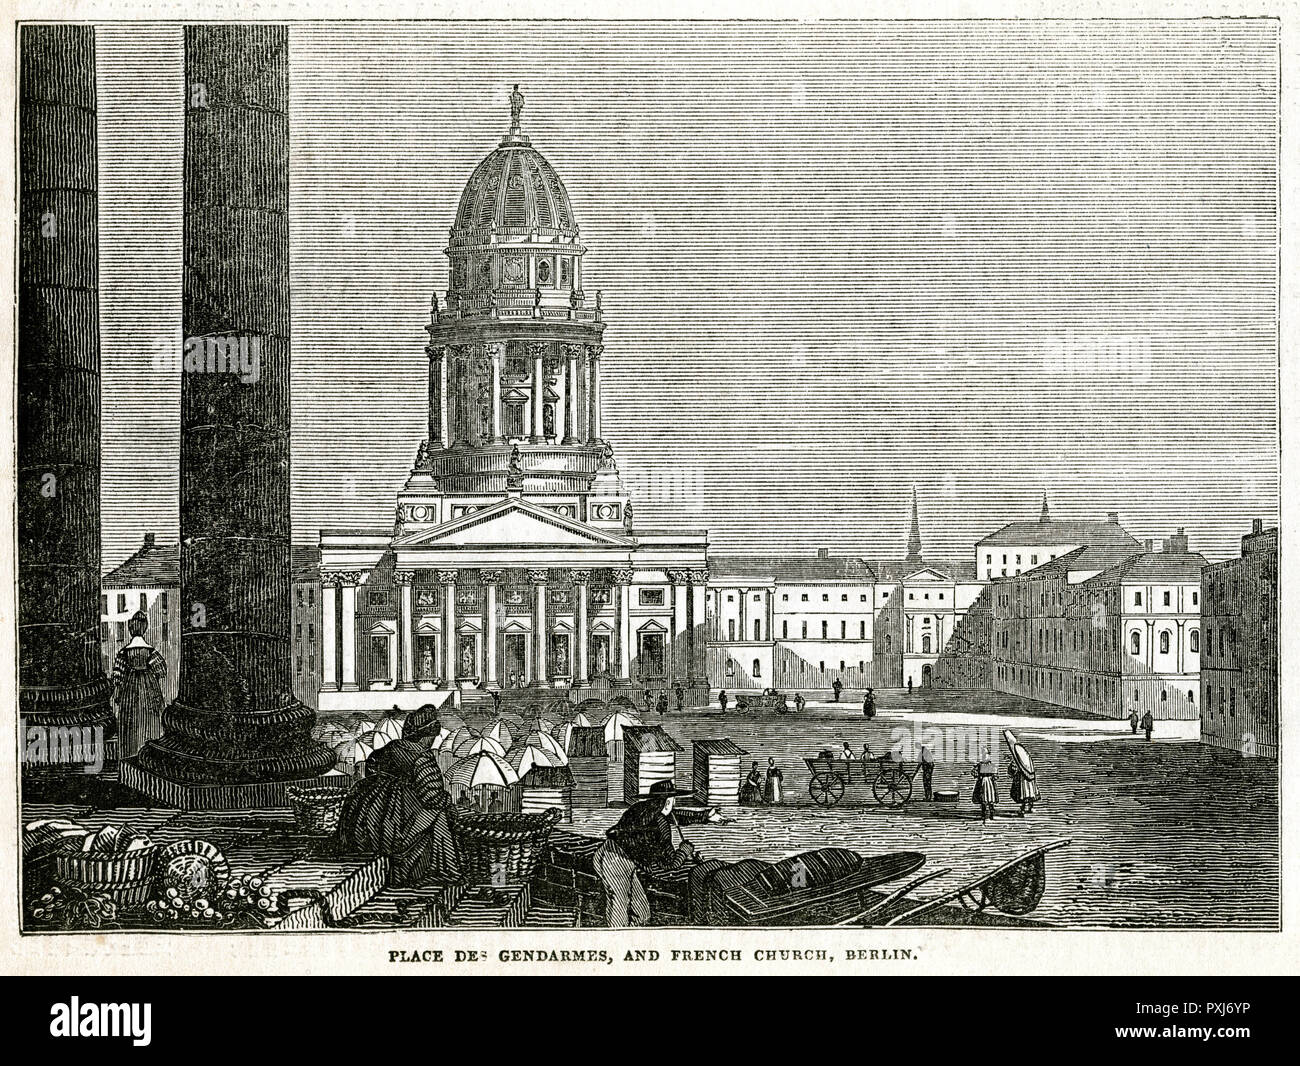 Gendarmenmarkt market square in Berlin.     Date: 1834 Stock Photo